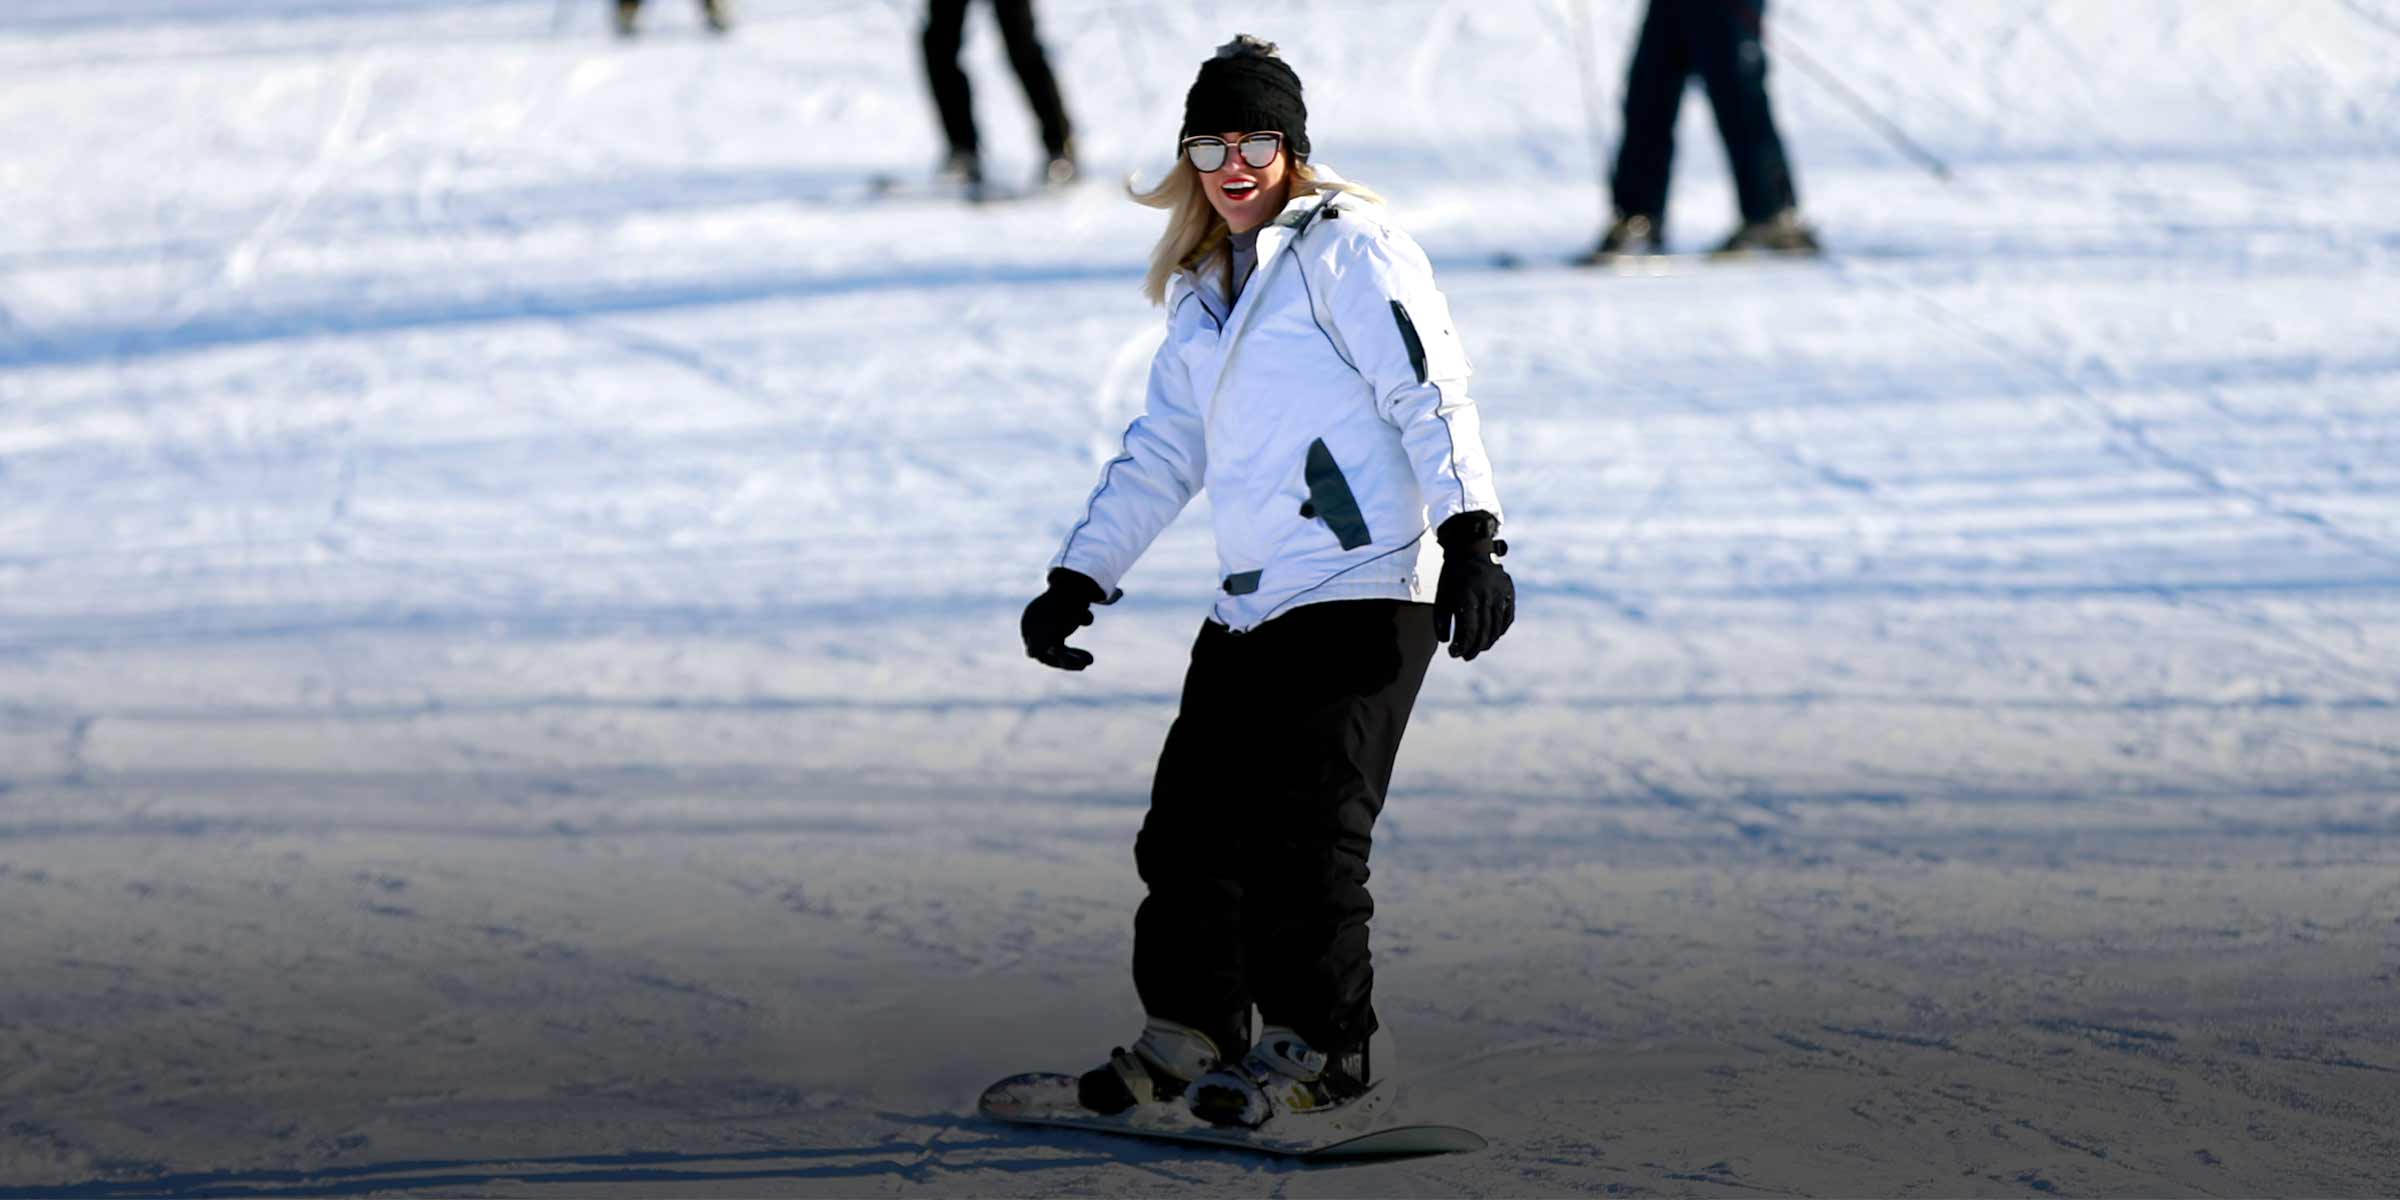 Ashley Poland Snowboarding